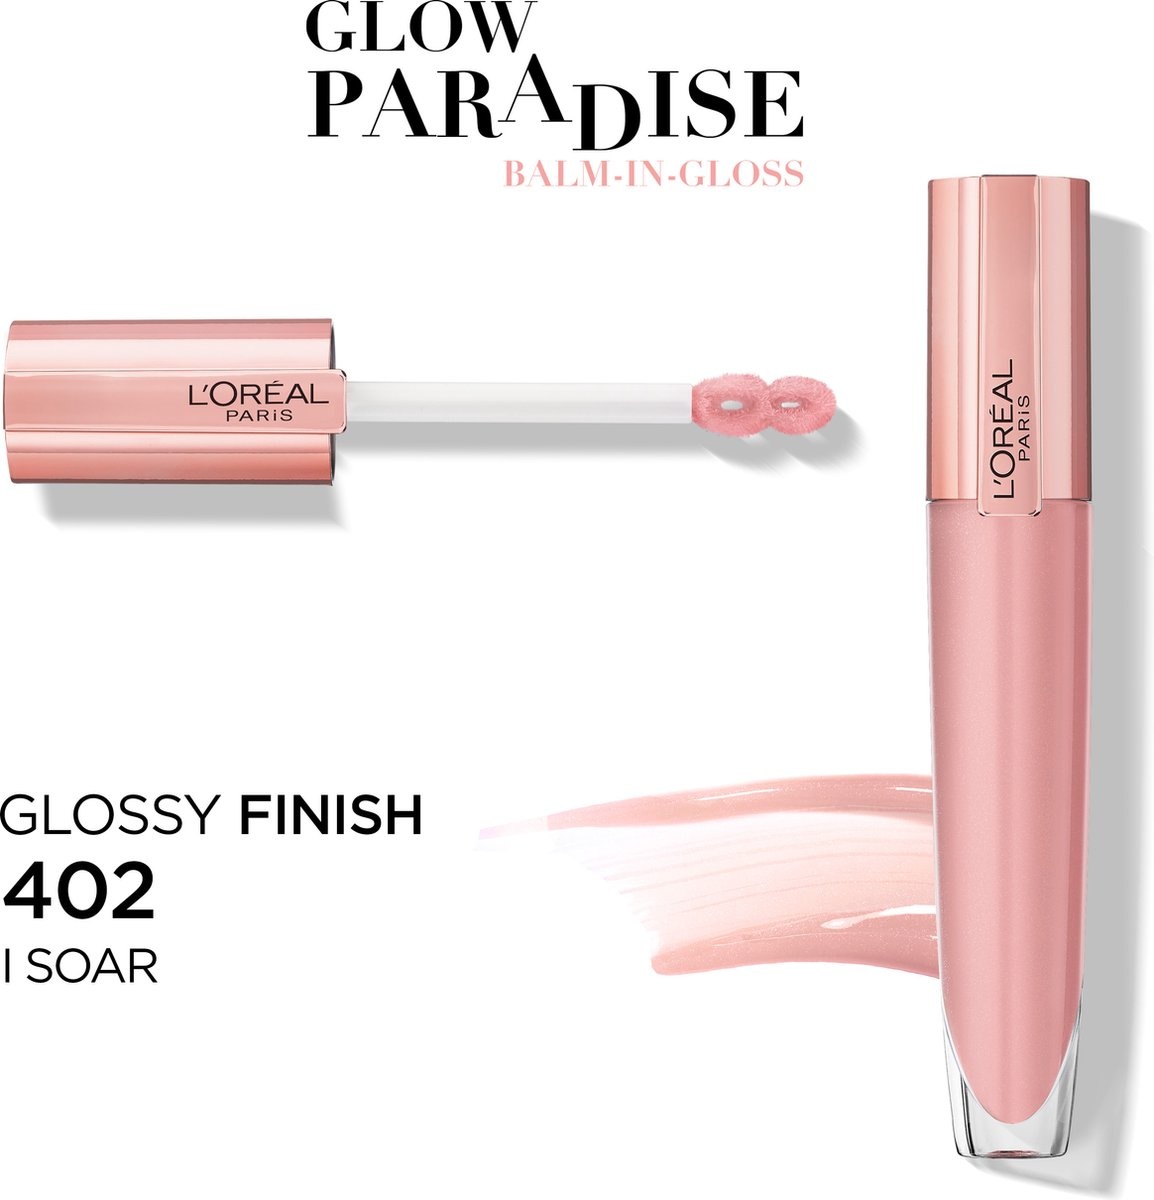 L'Oréal Paris Glow Paradise Balm in Gloss - 402 I Soar - Transparant Roze